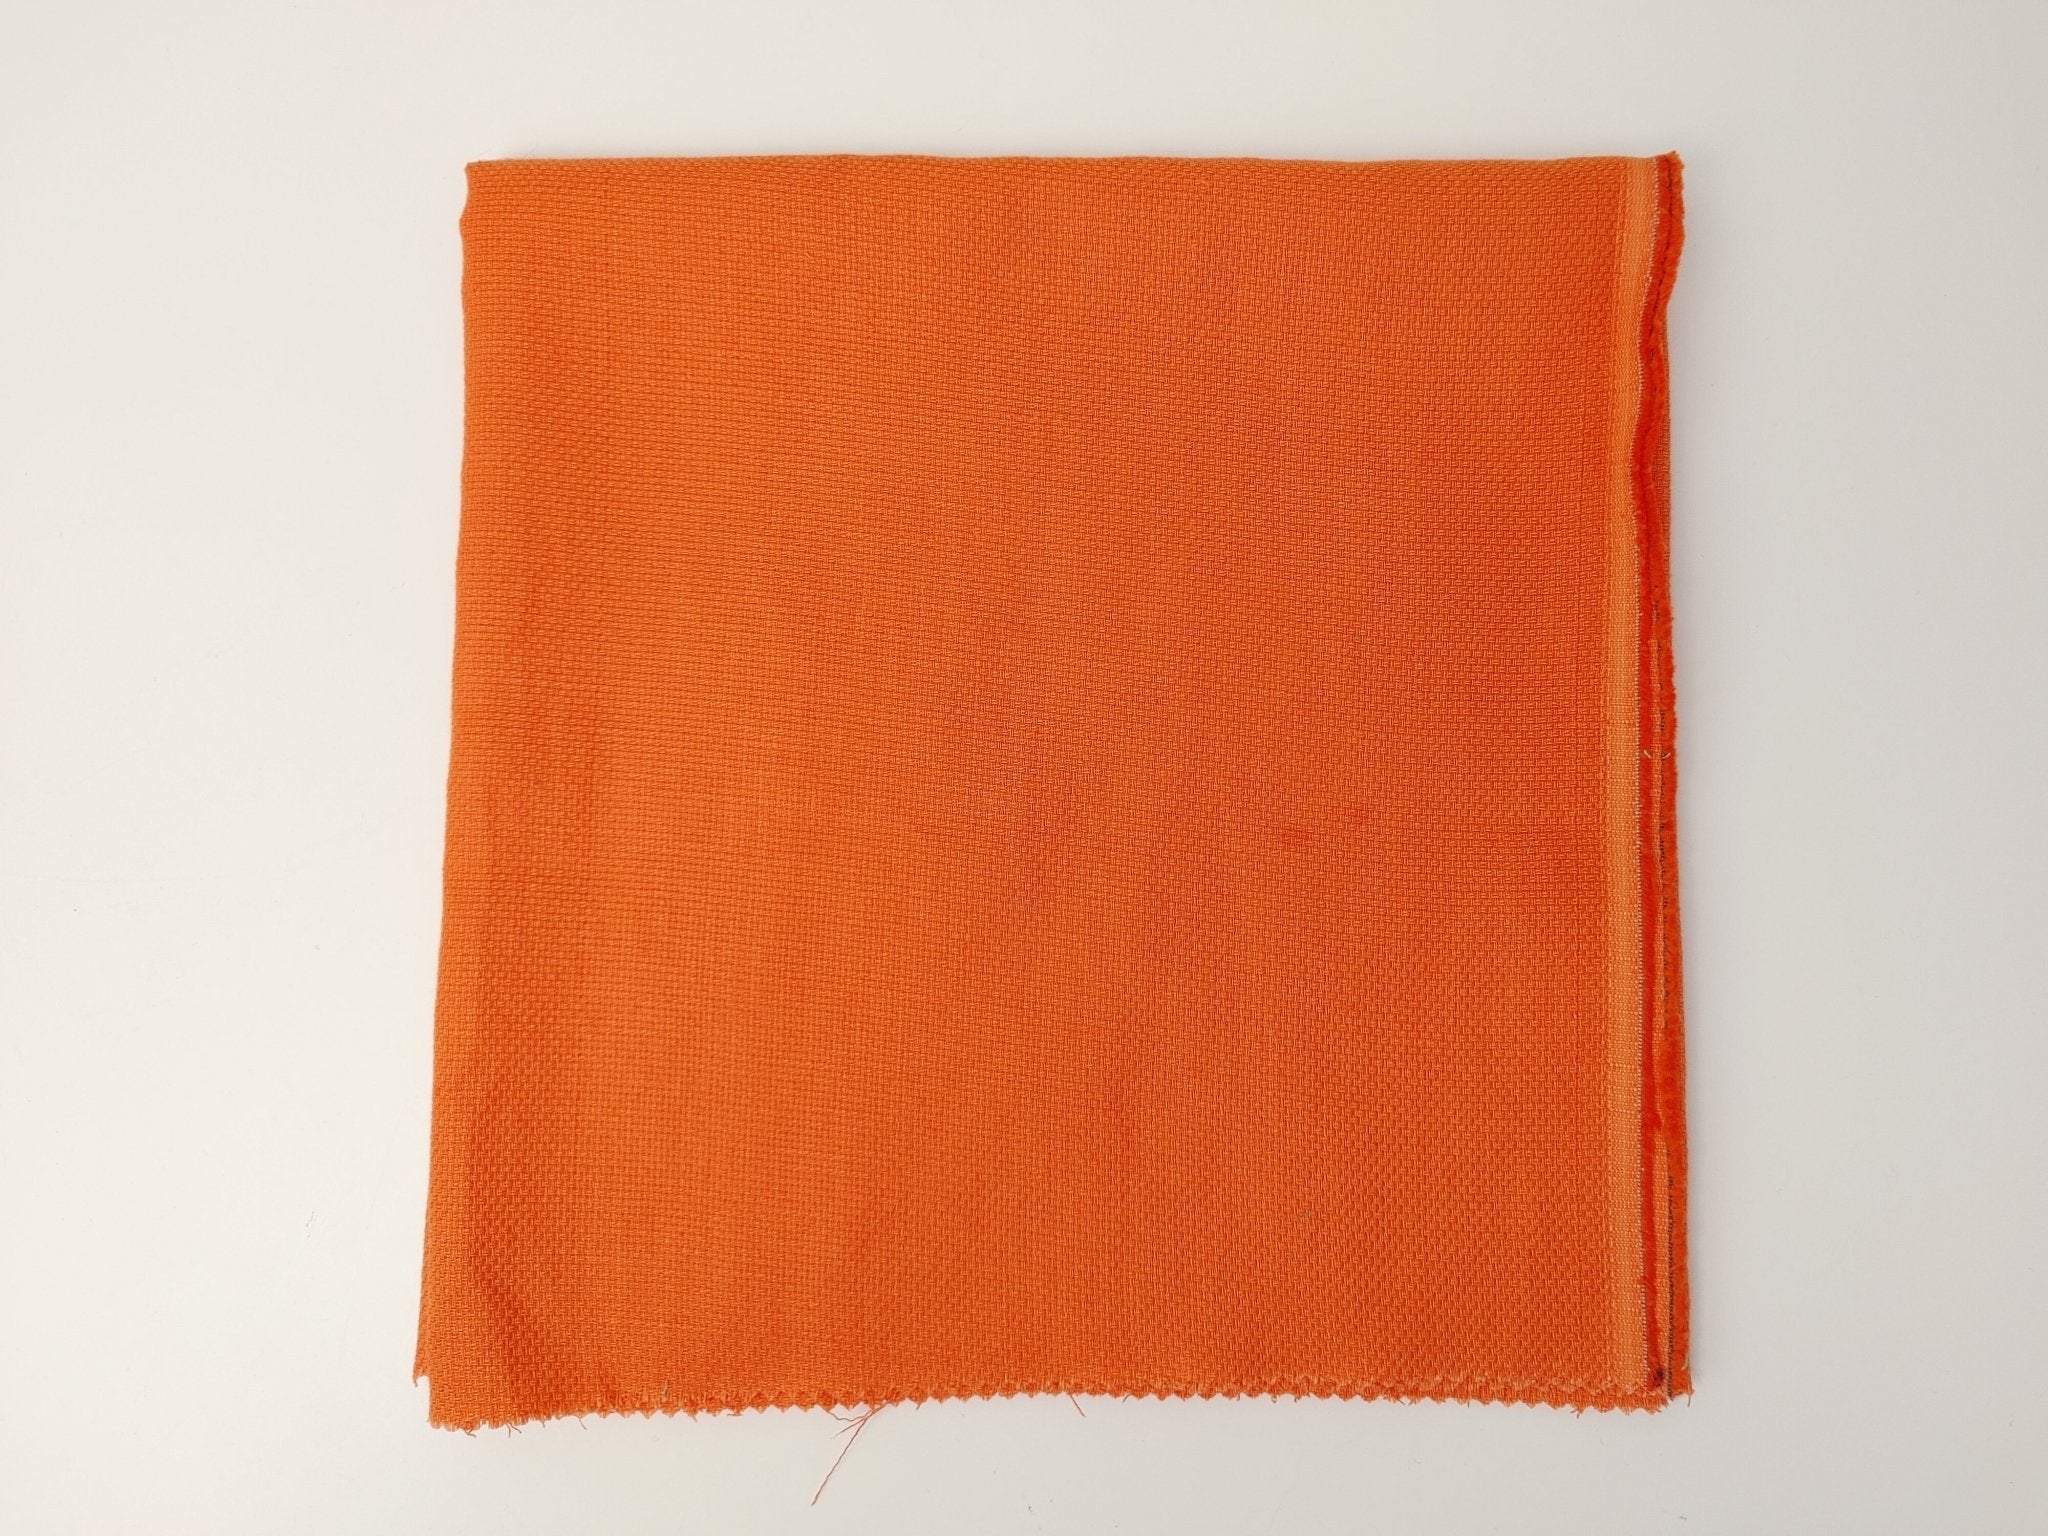 Linen Cotton Blend Dobby Fabric 3932 3933 3934 - The Linen Lab - Orange